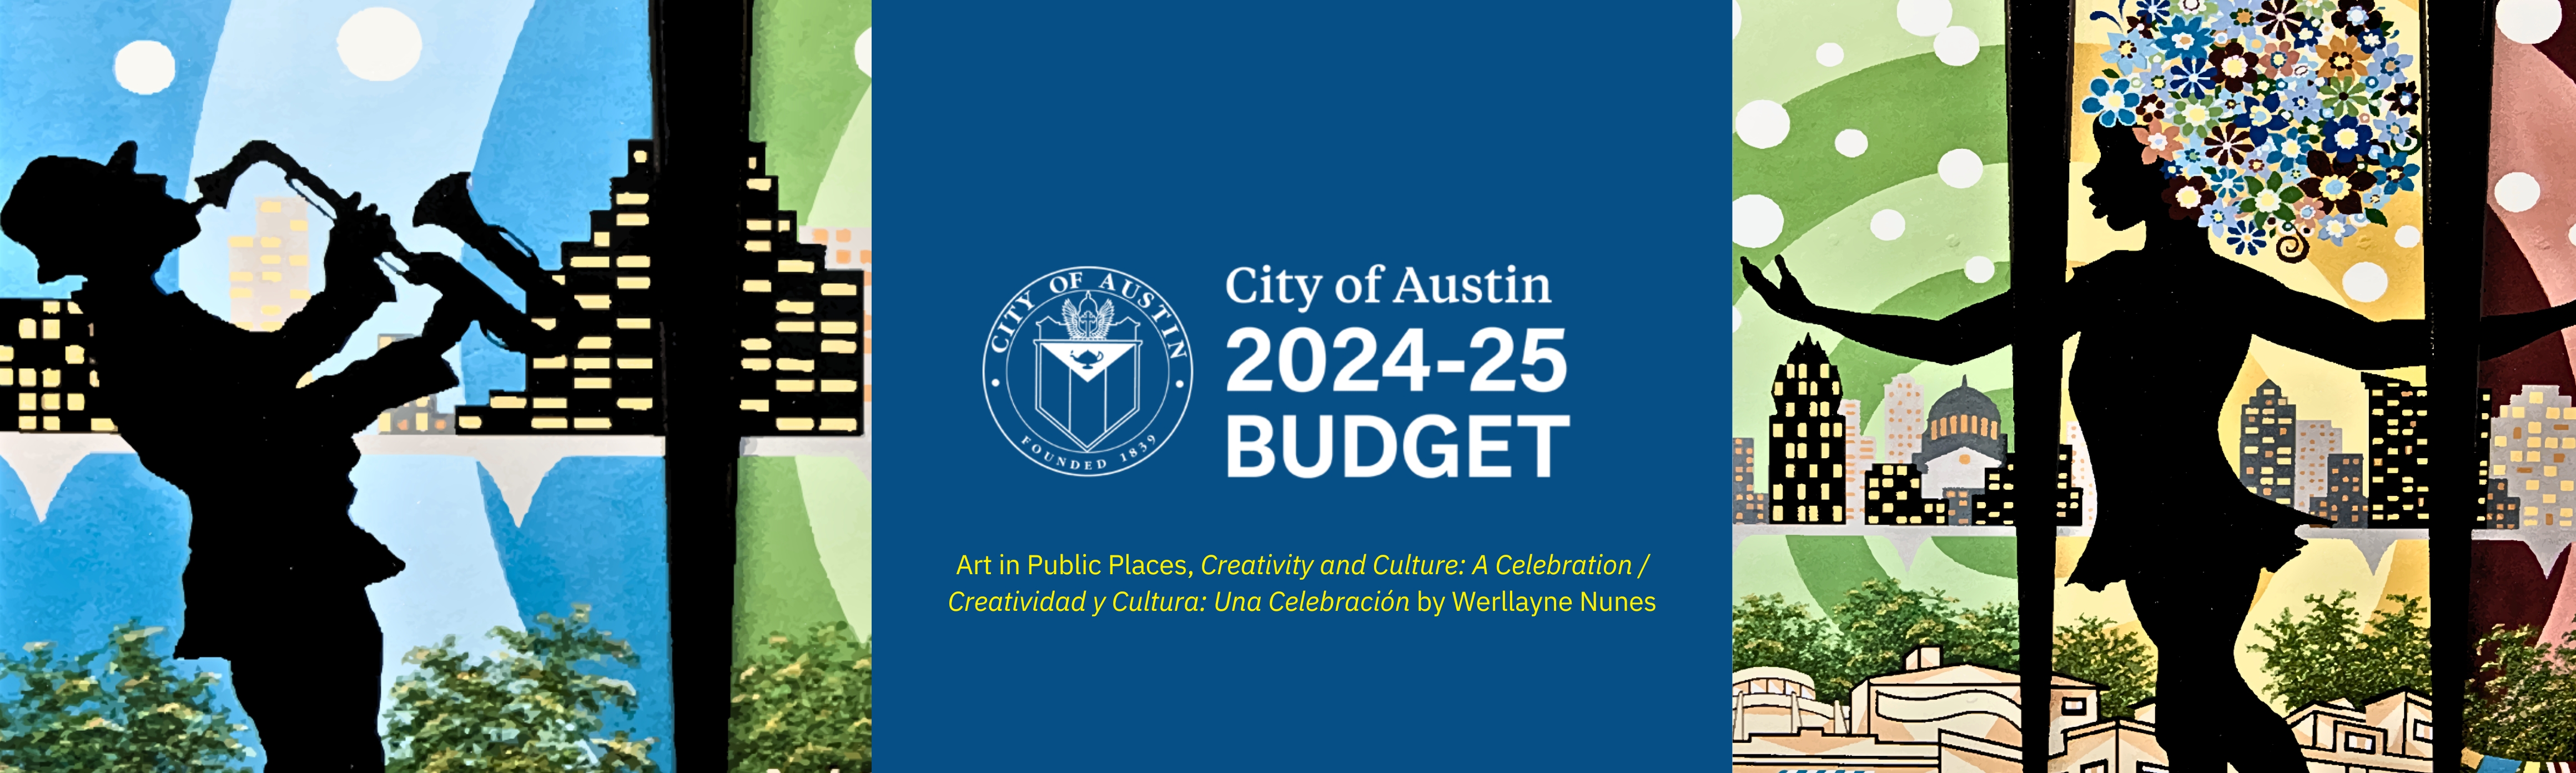 2024-25 budget